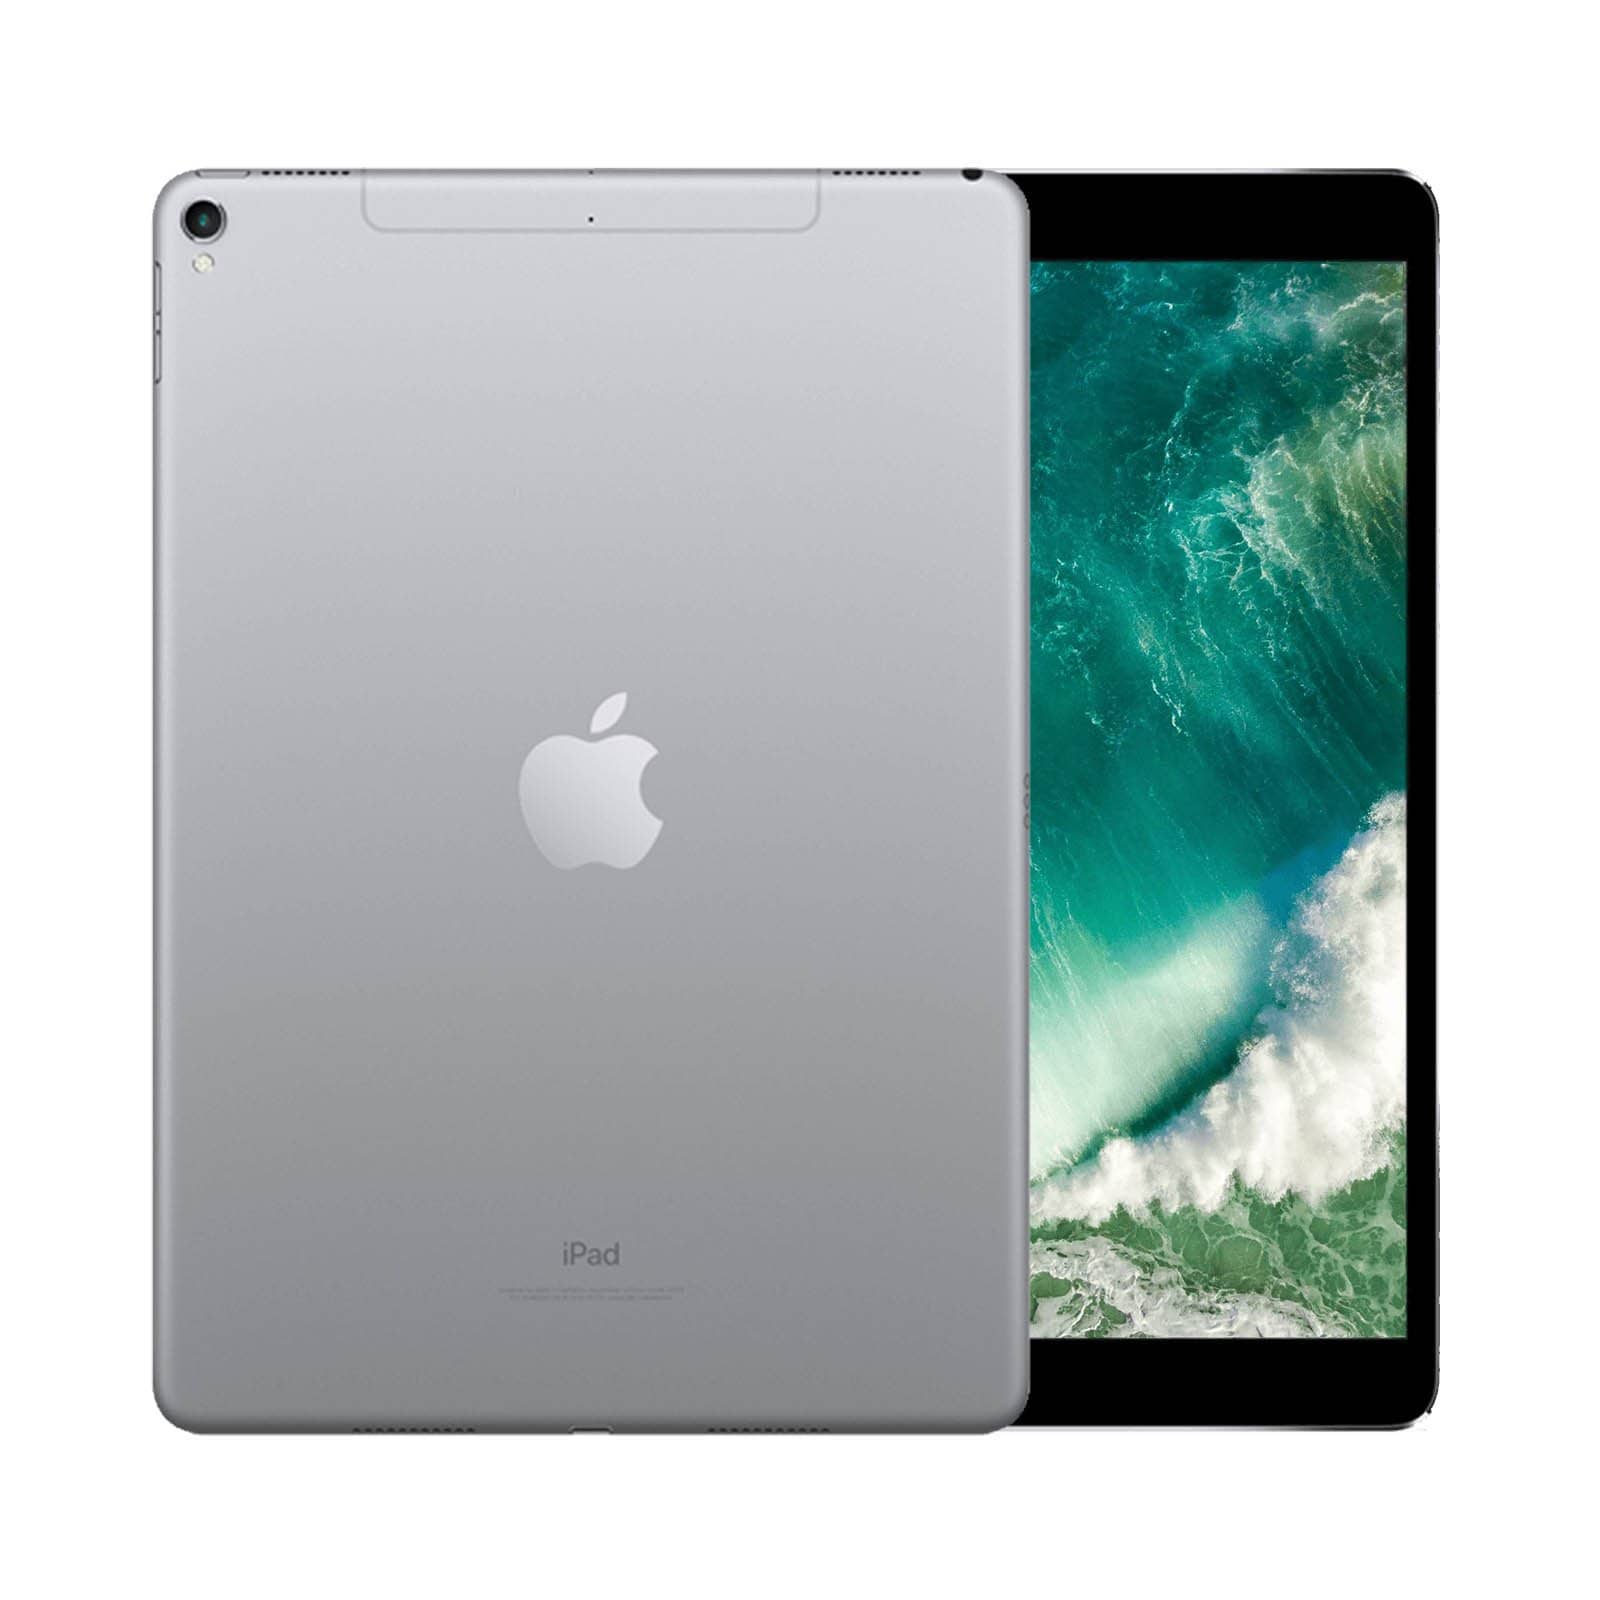 iPad Pro 10.5 Inch 256GB Space Grey Good - Unlocked 256GB Space Grey Good